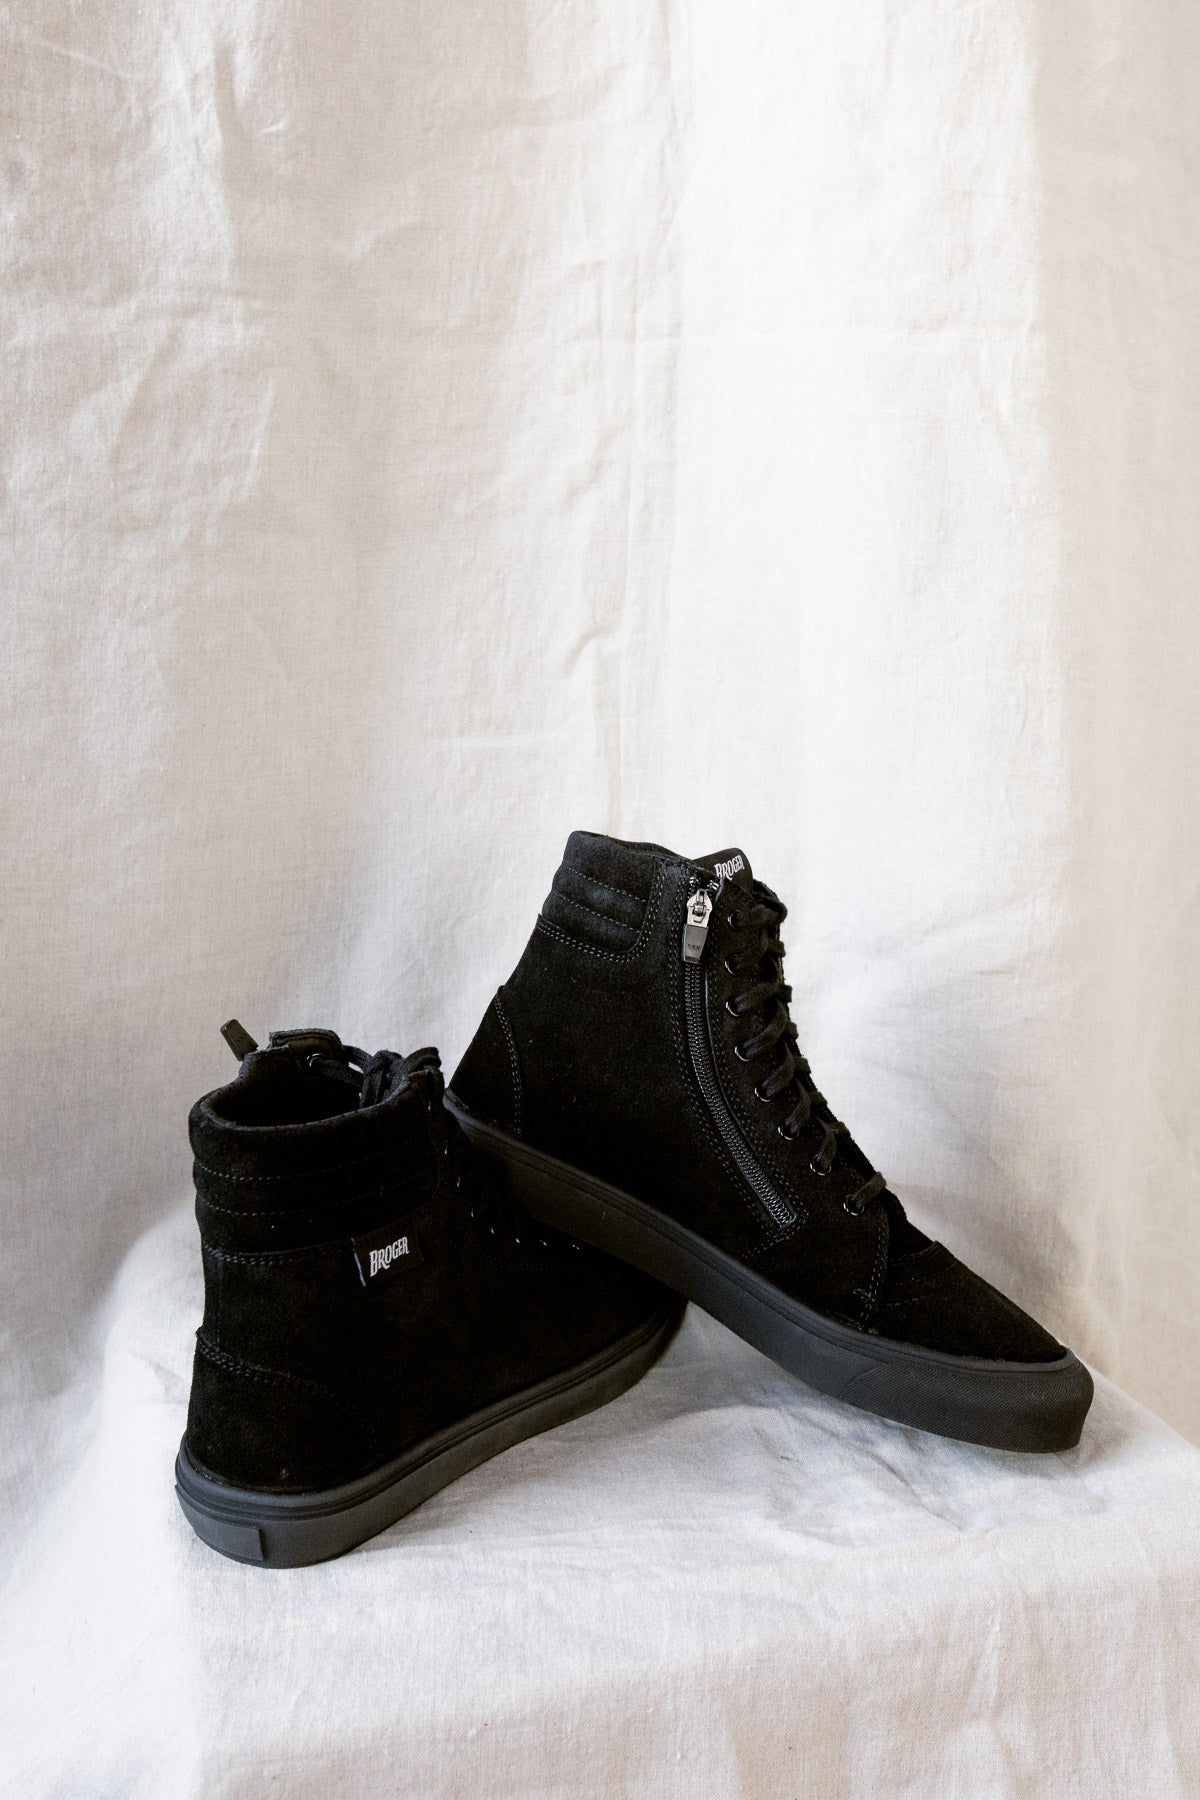 California Black/Black Boots